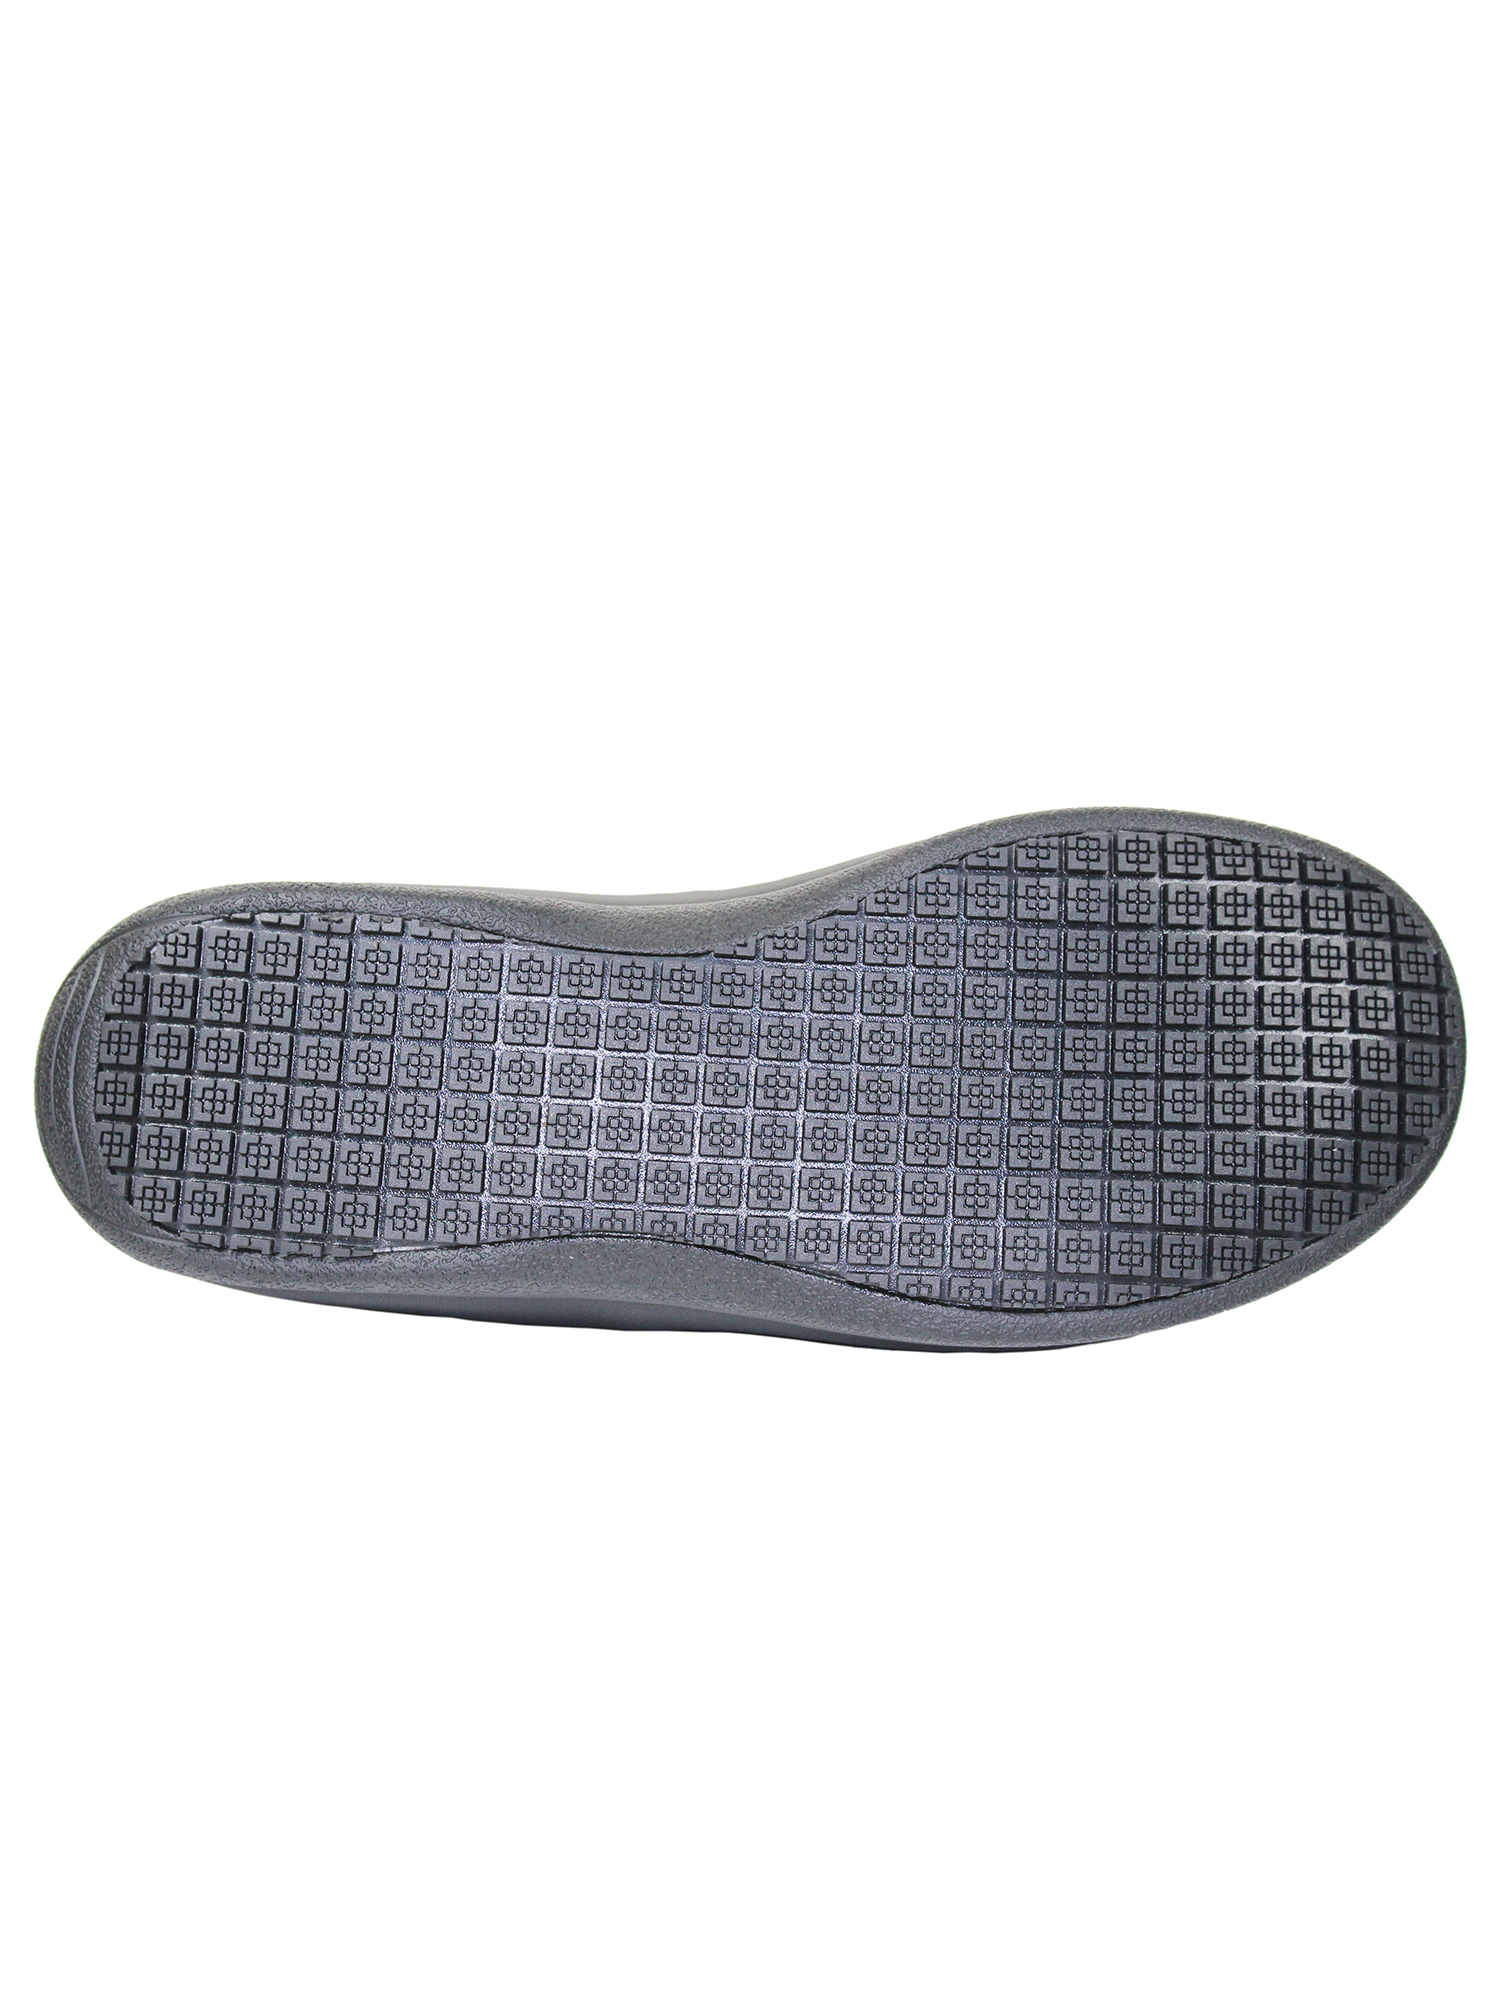 Tanleewa Women's Slip Resistant Work Shoes Waterproof Casual Lightweight Shoe Size 9.5 Adult Male - image 5 of 5